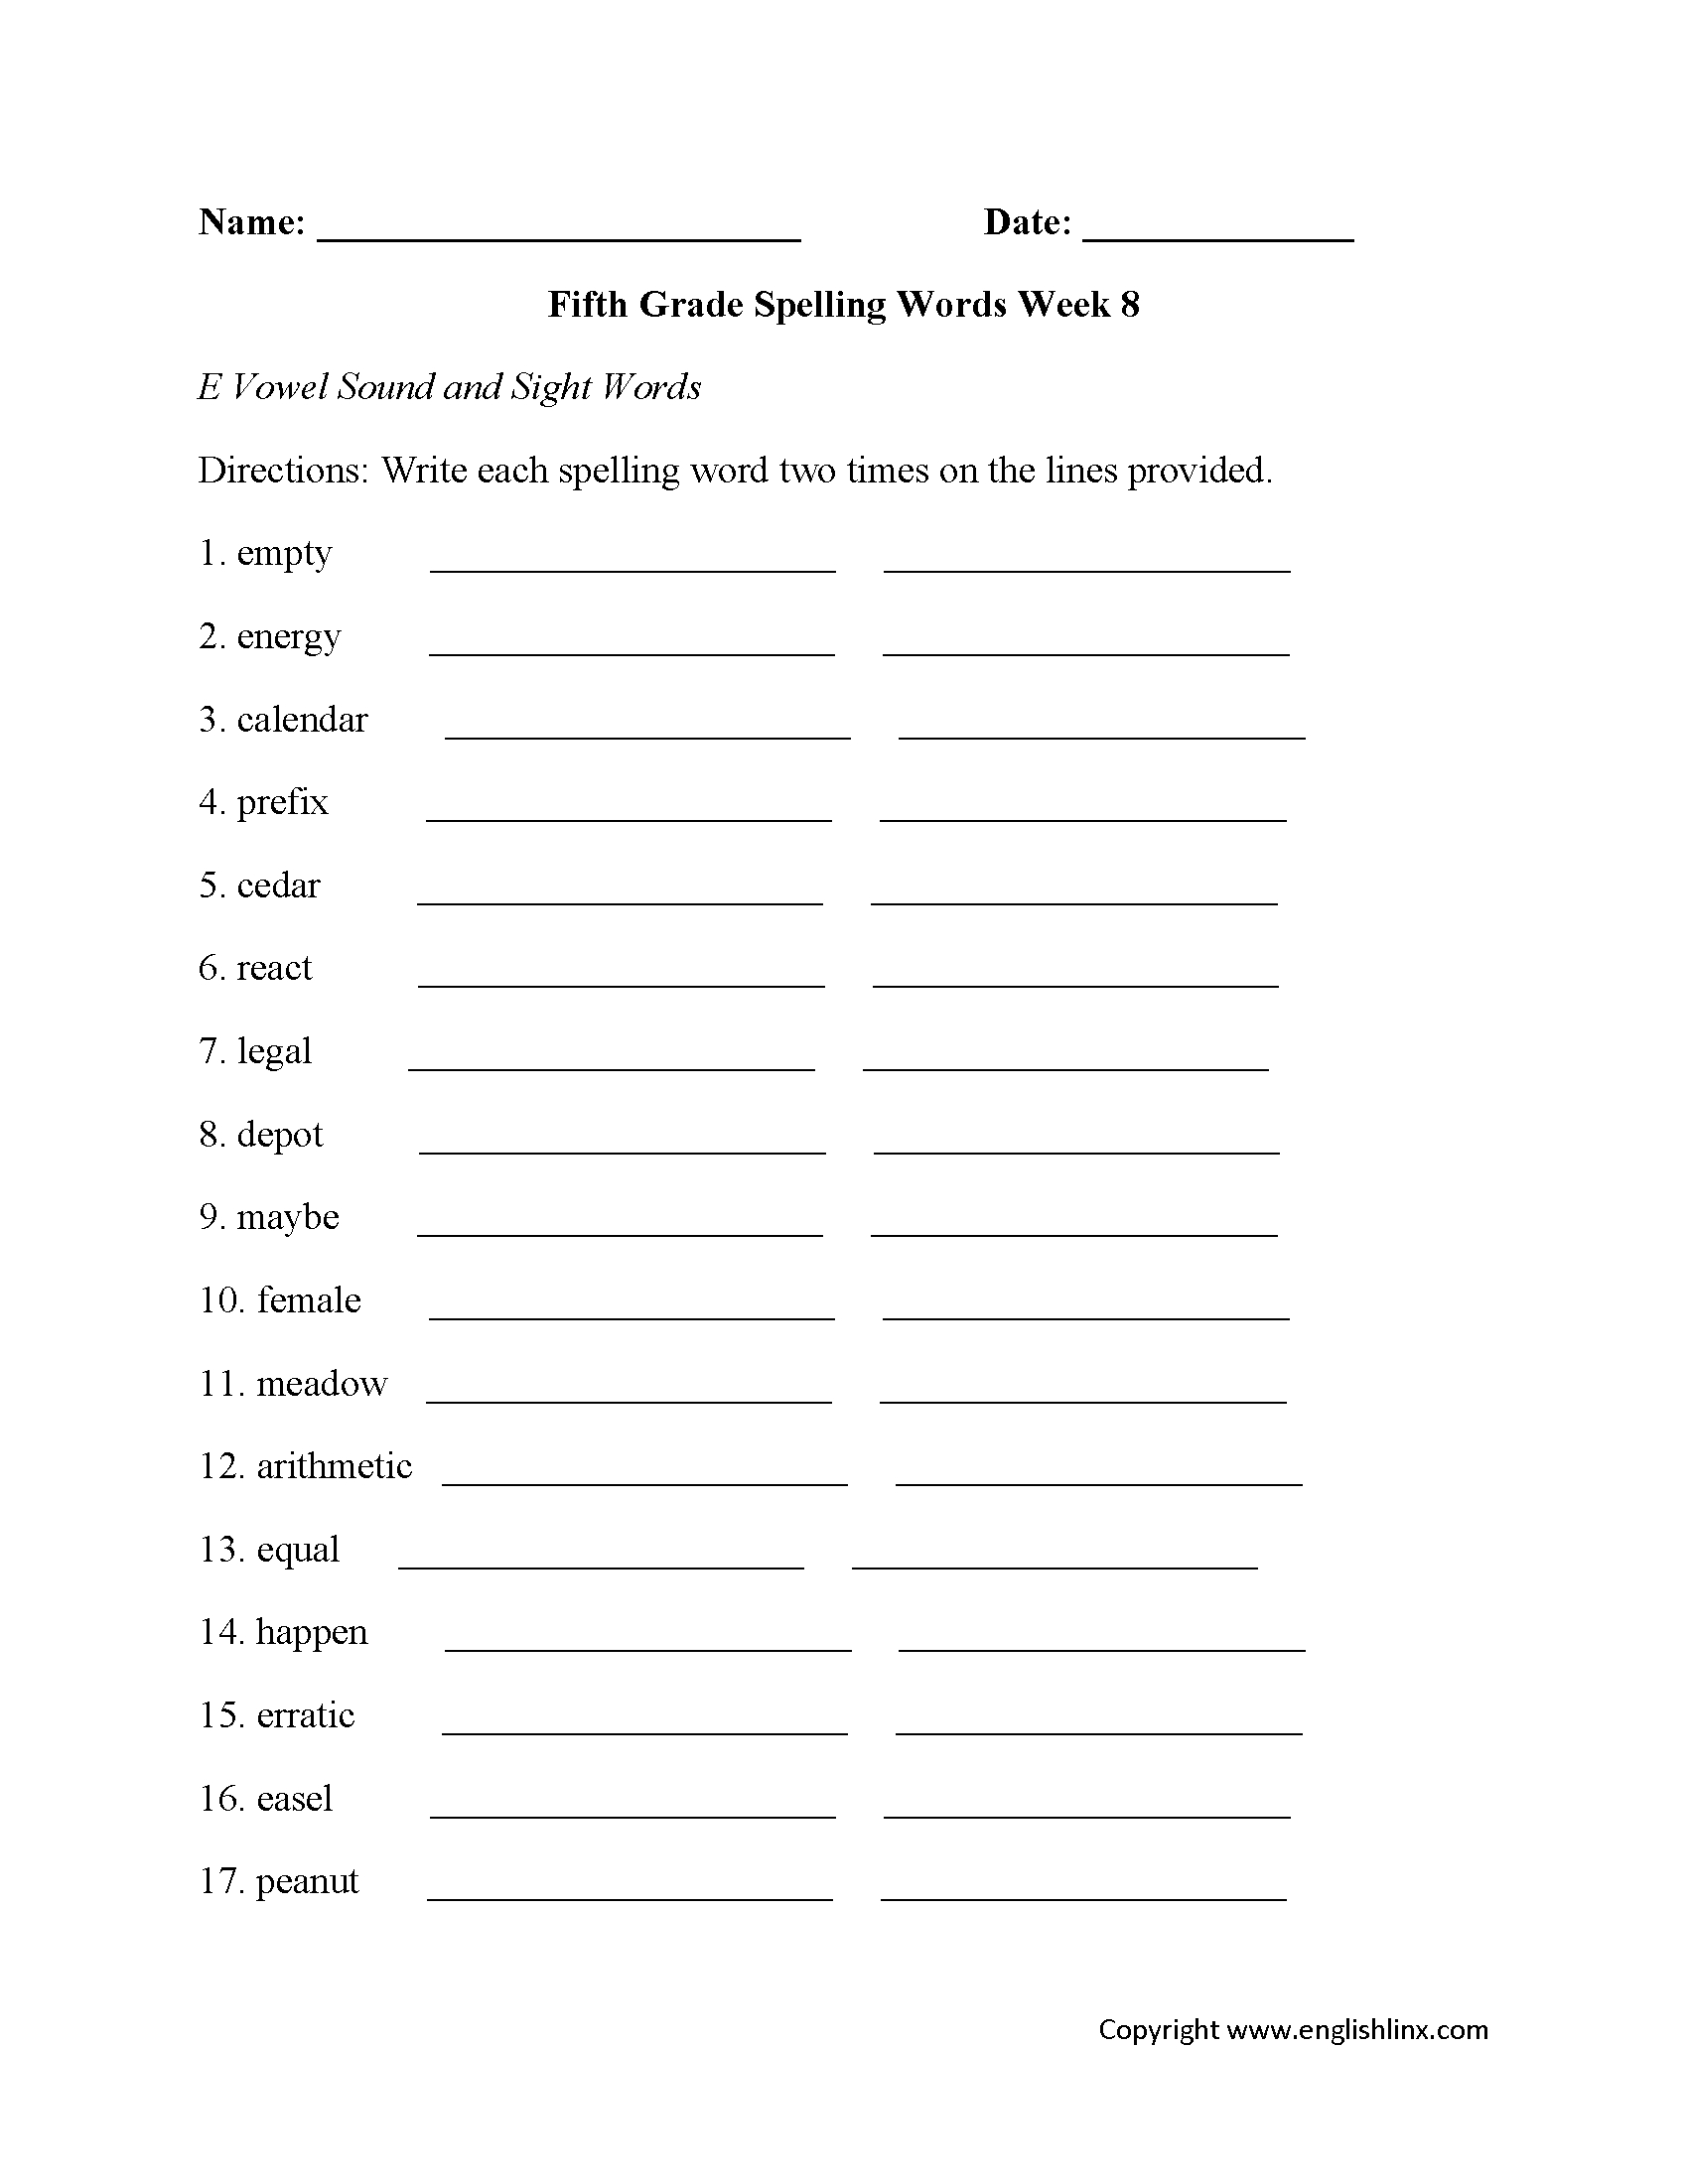 Spelling Worksheets | Fifth Grade Spelling Worksheets - 7Th Grade Spelling Worksheets Free Printable